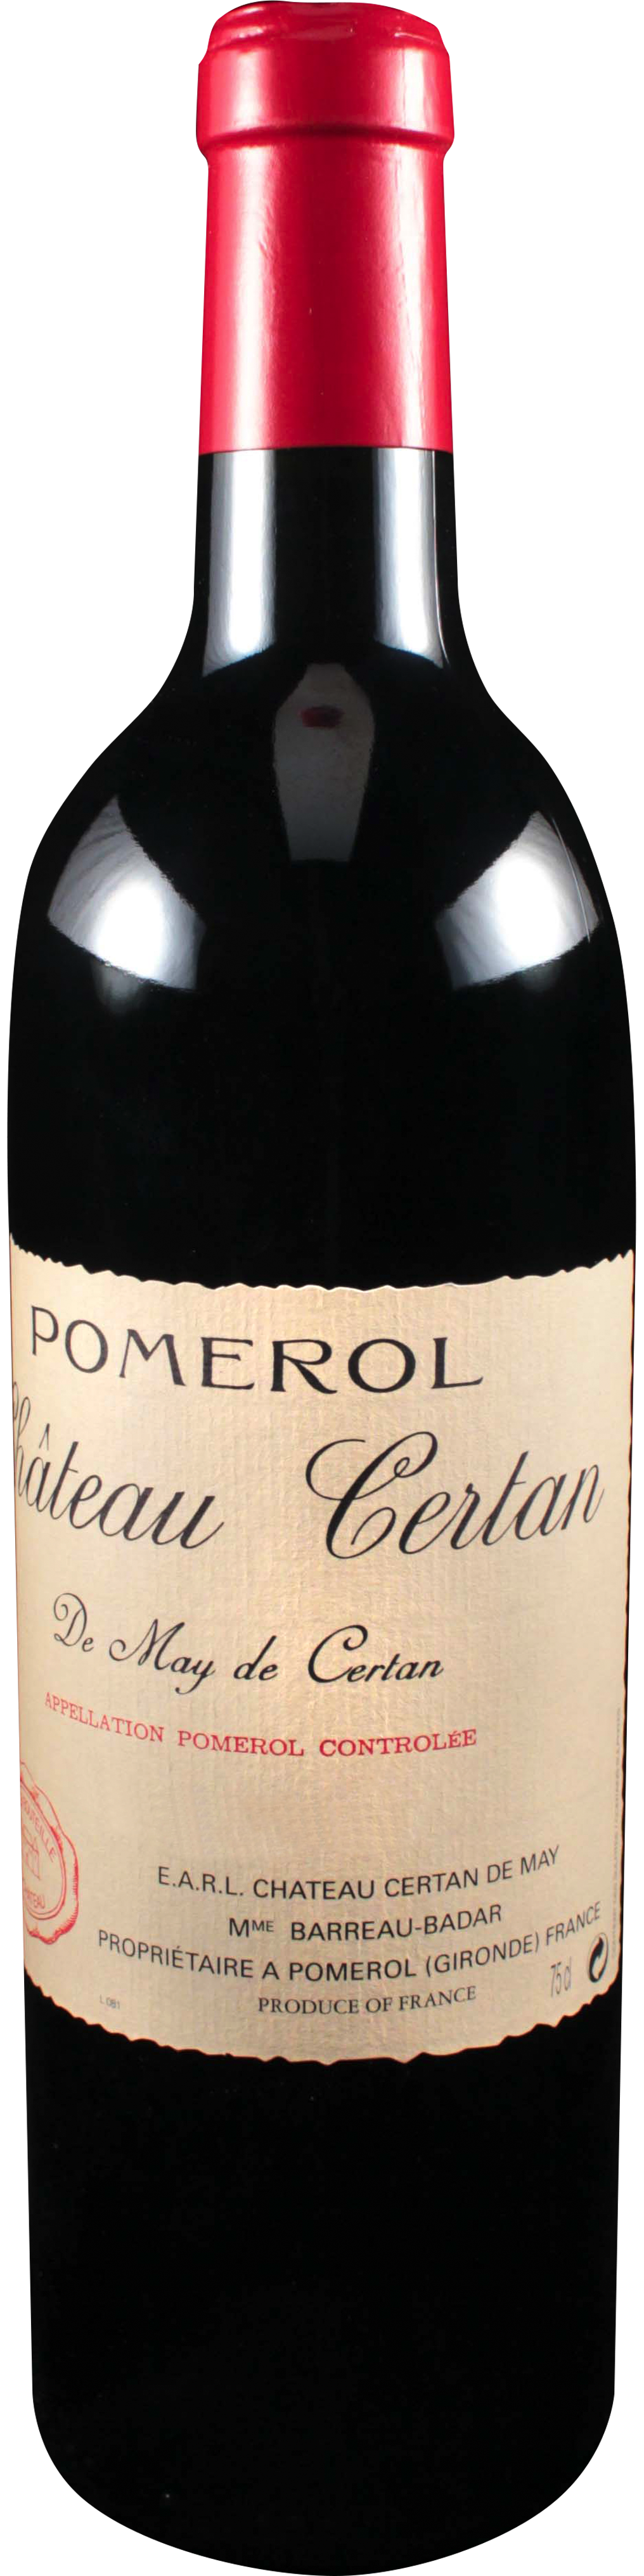 Bottle shot of 2011 Château Certan de May, Pomerol